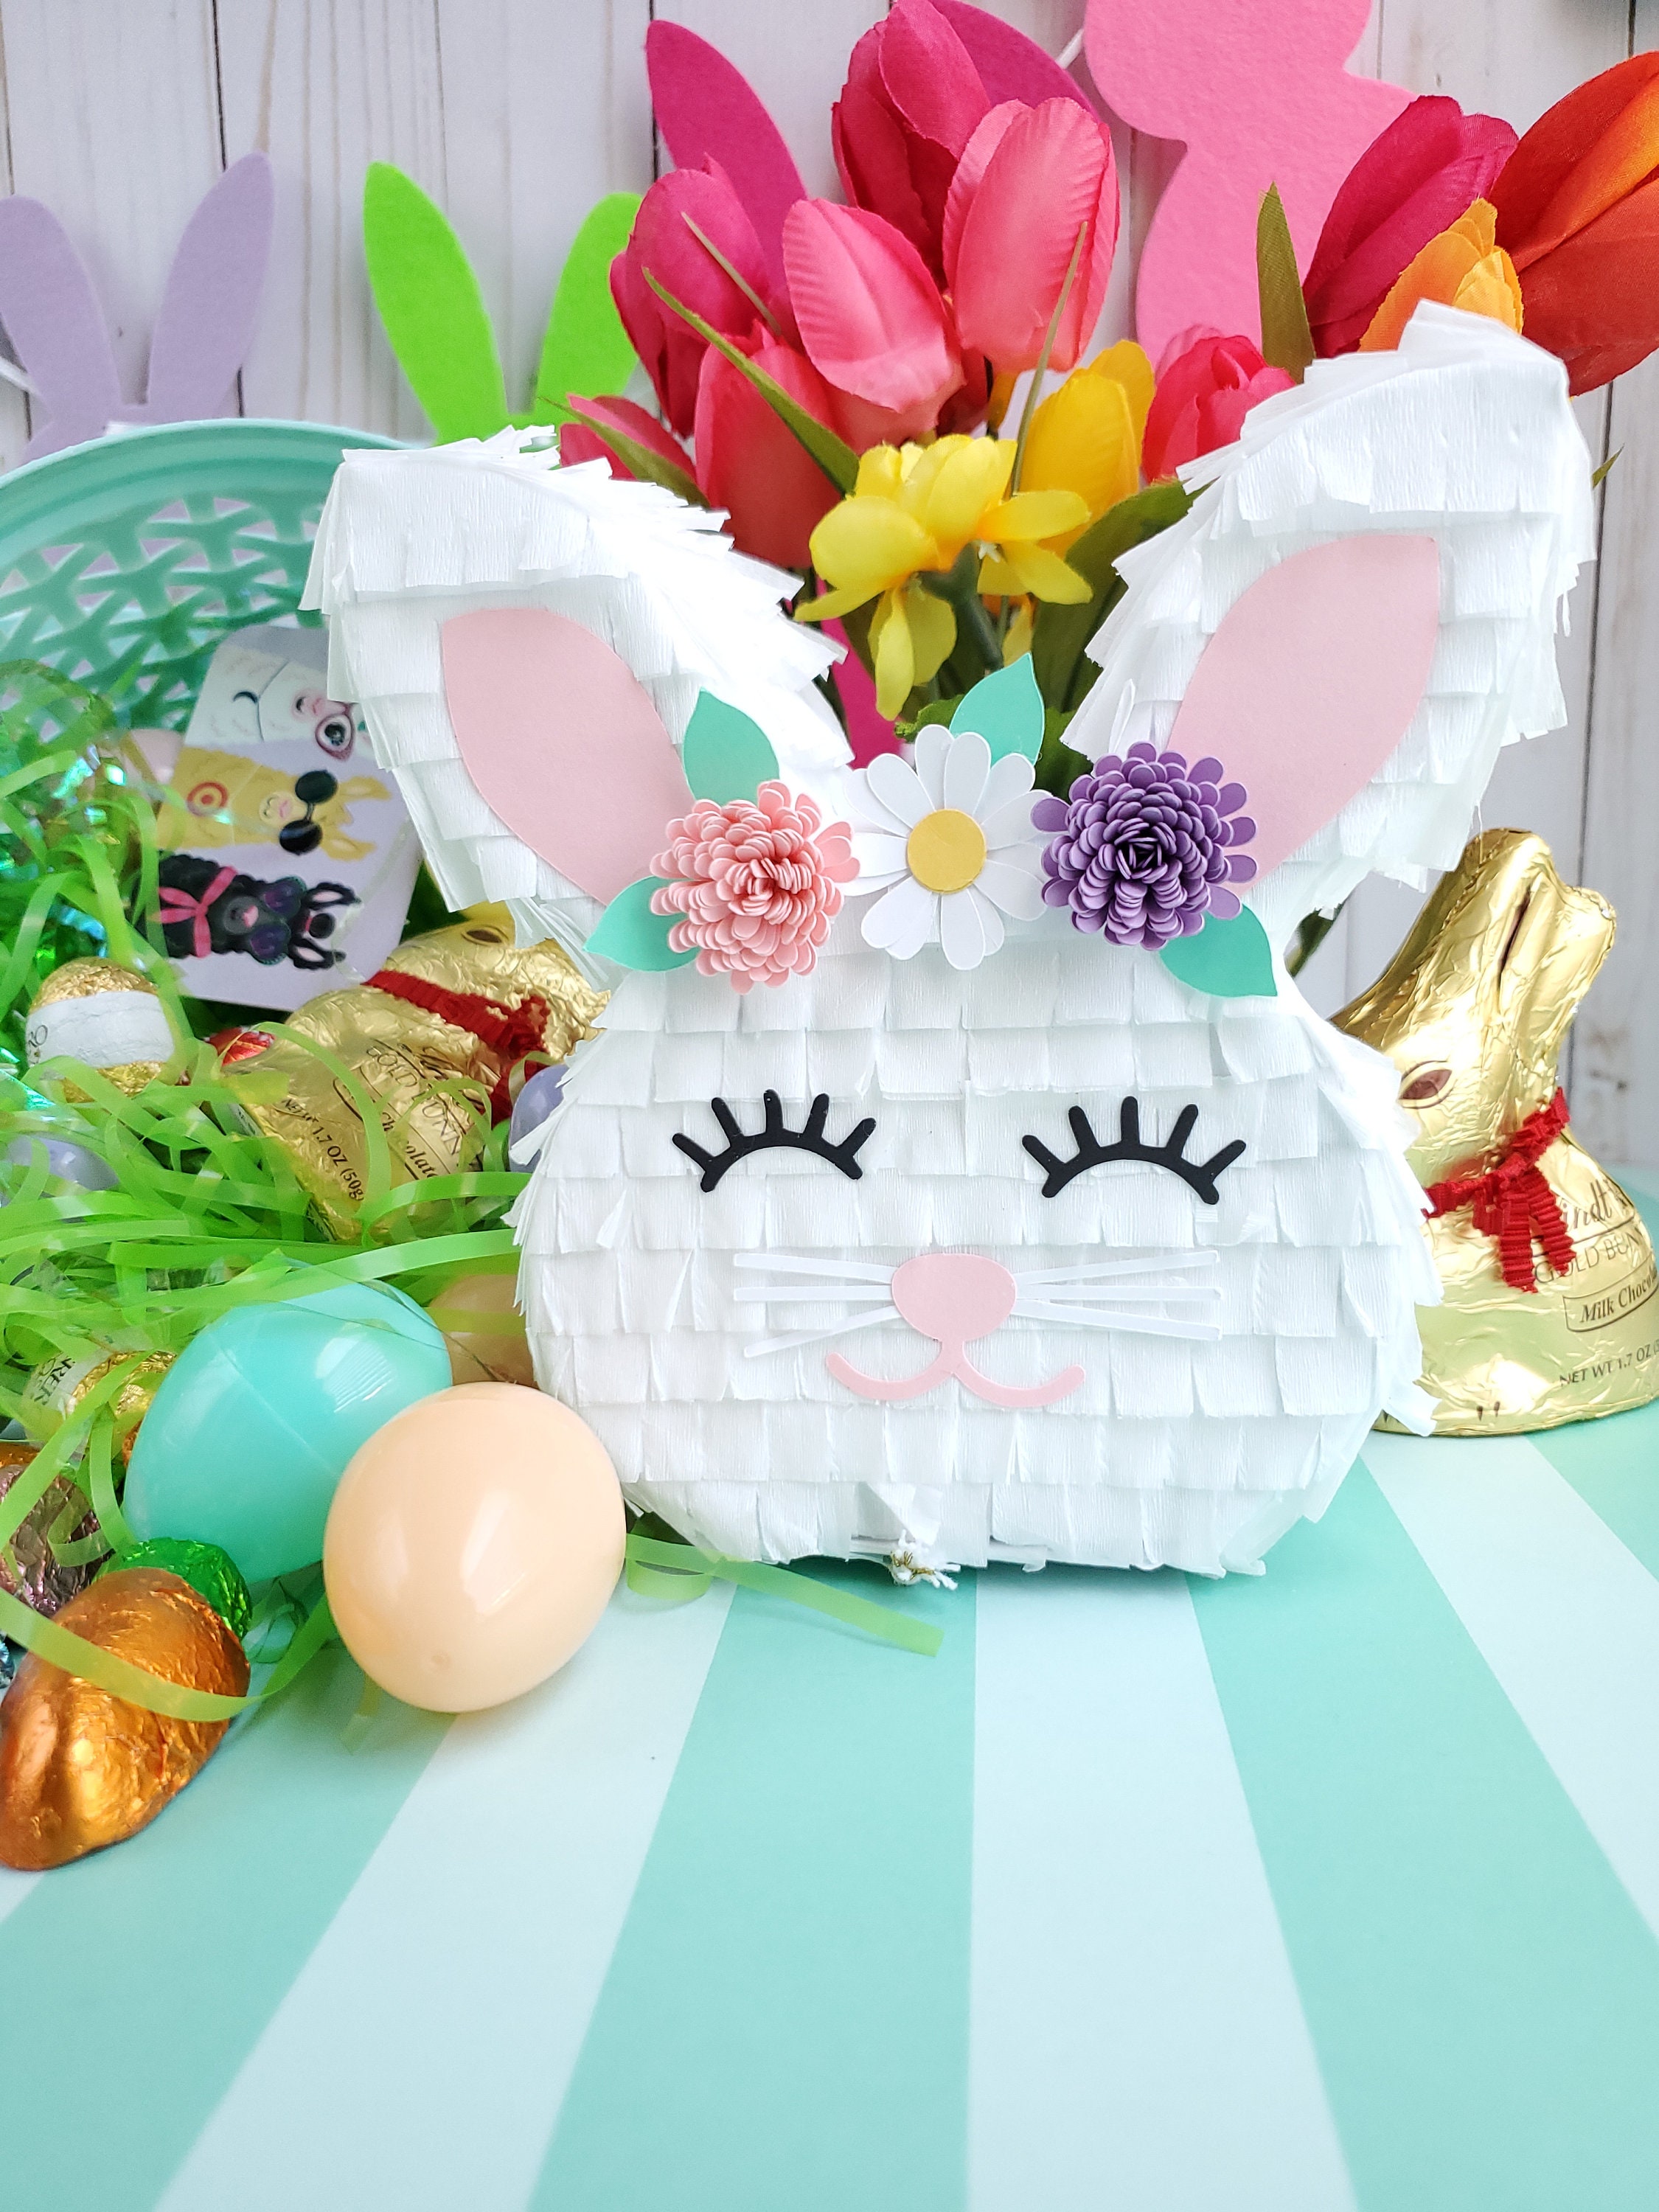 Happy Easter Bunny Pinata - Custom Party Pinatas 